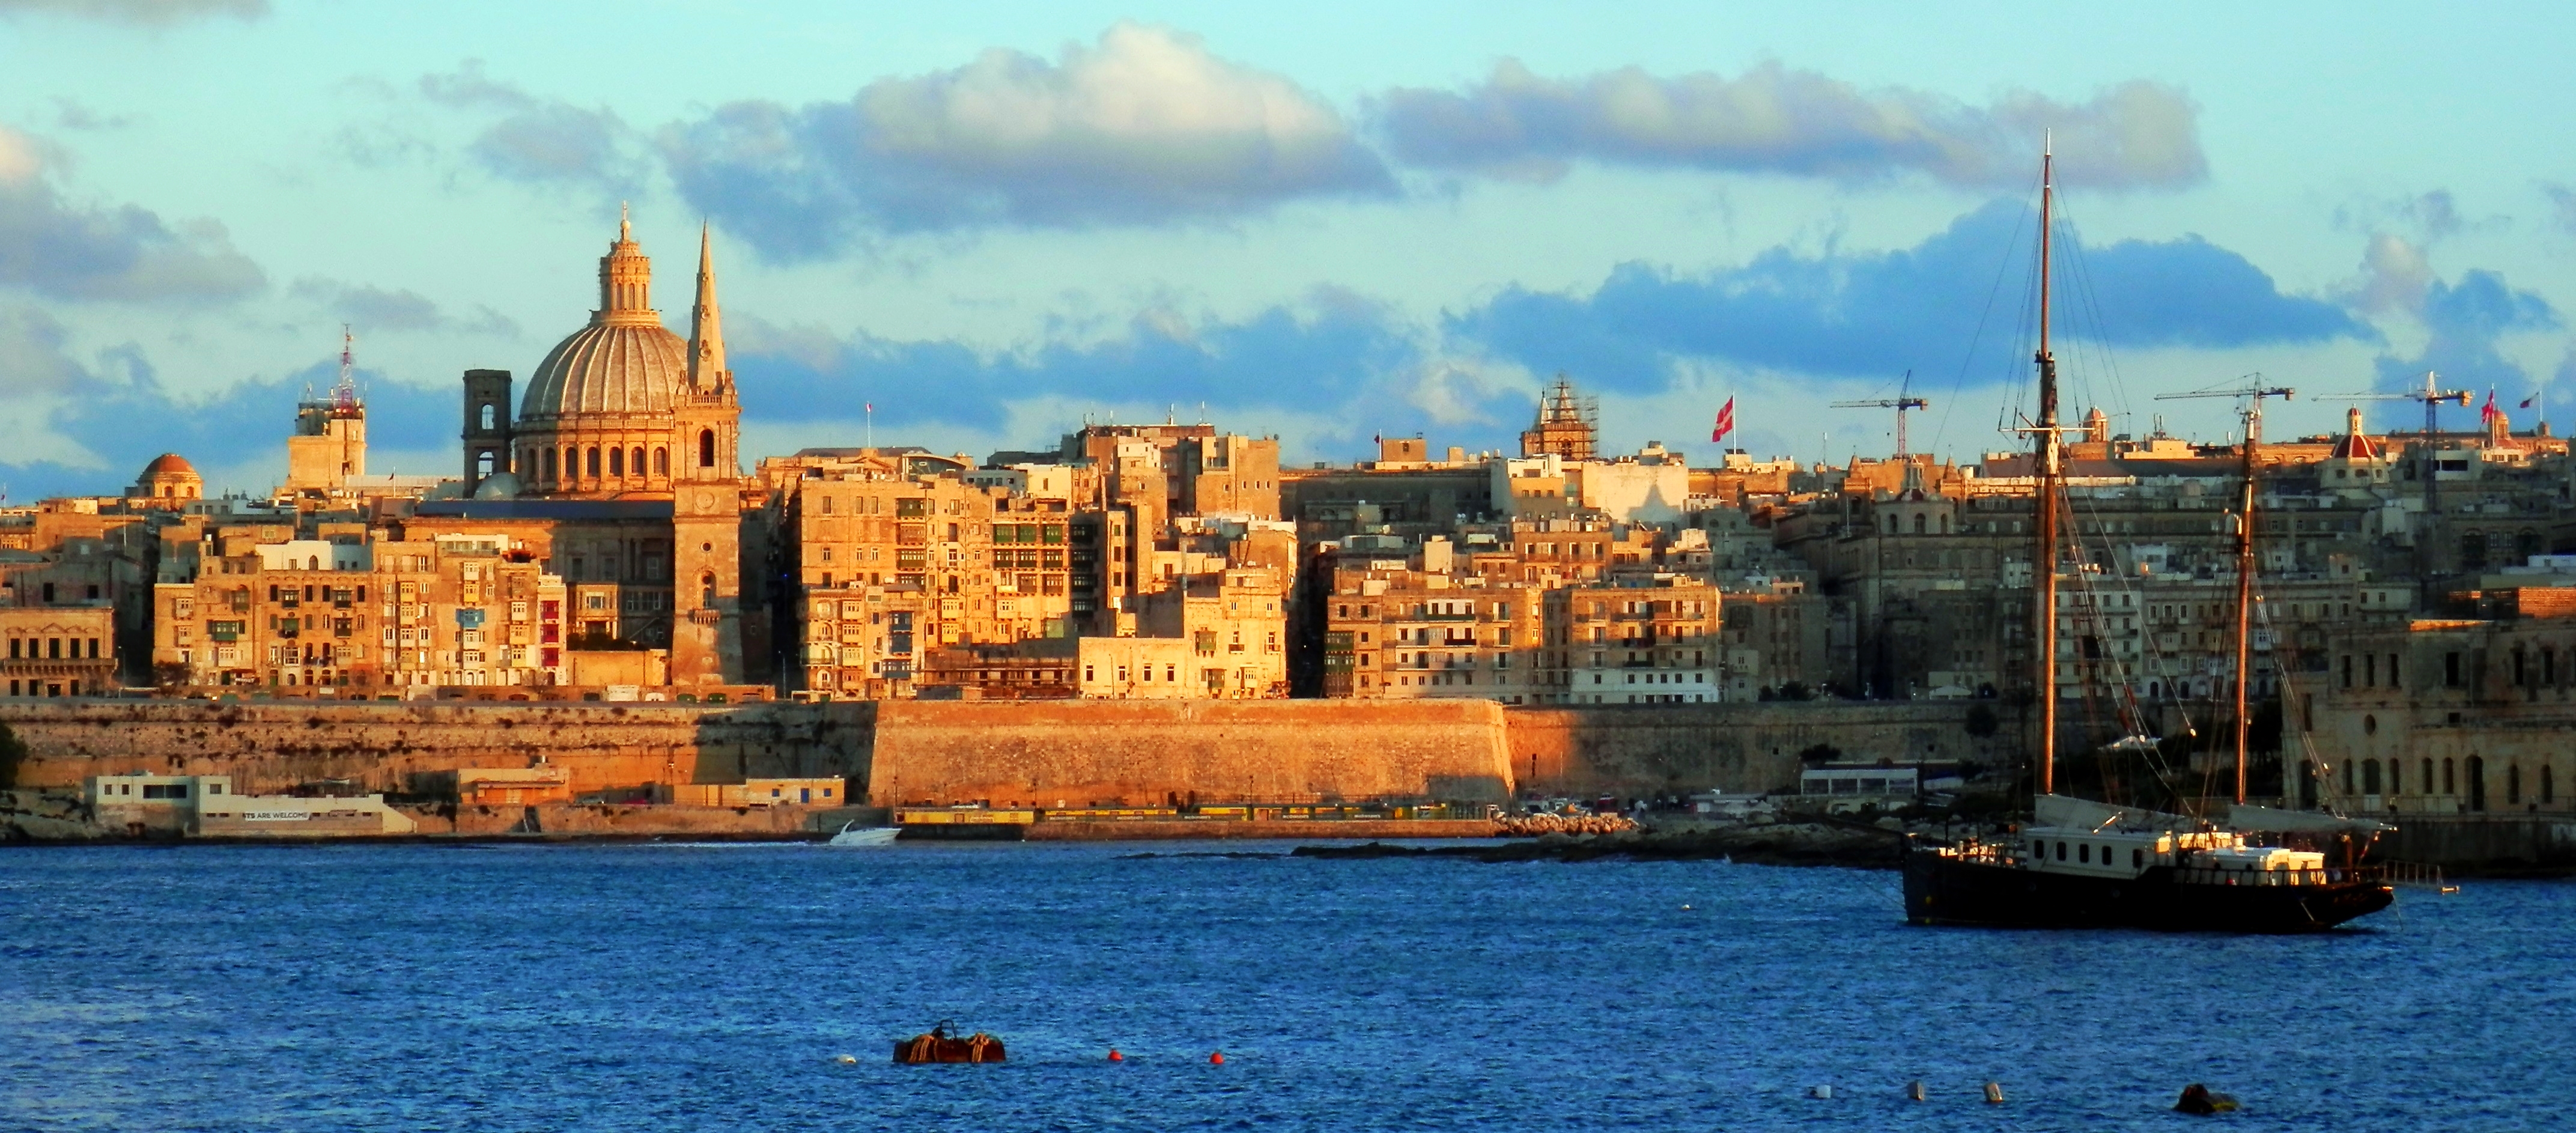 Malta – A Gem in the Mediterranean Sea